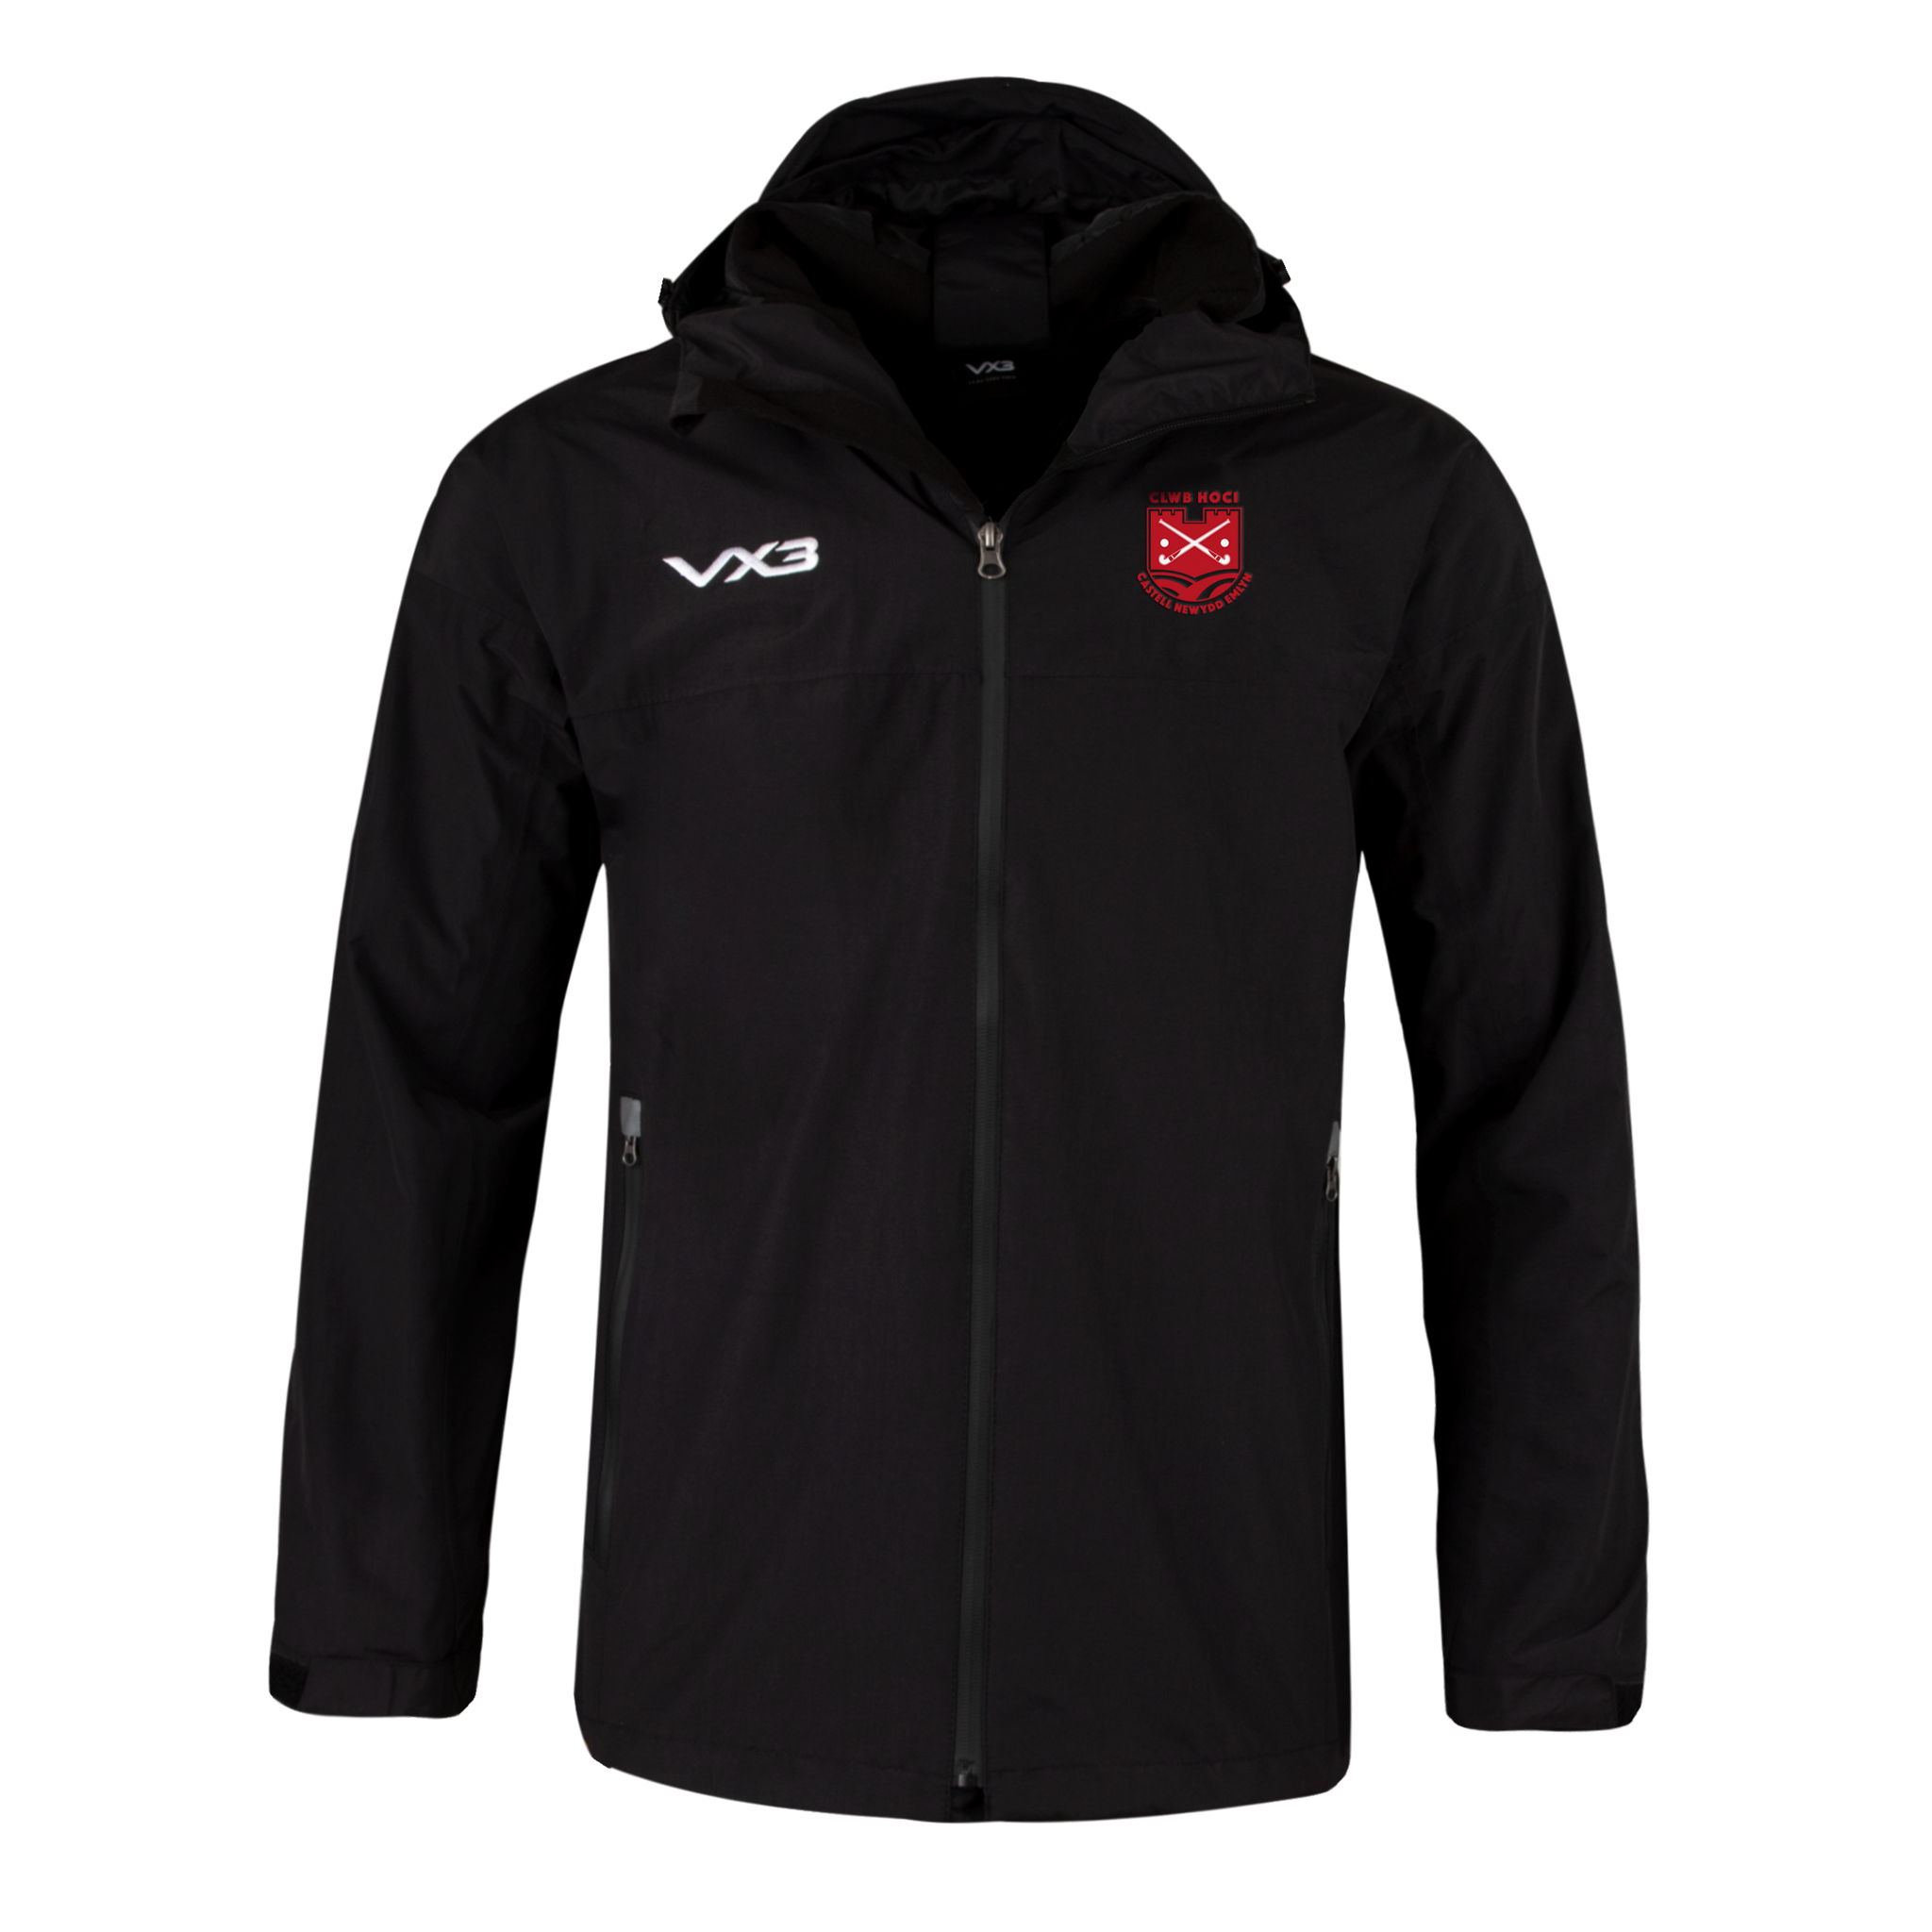 Newcastle Emlyn Hockey Club Protego Waterproof Jacket